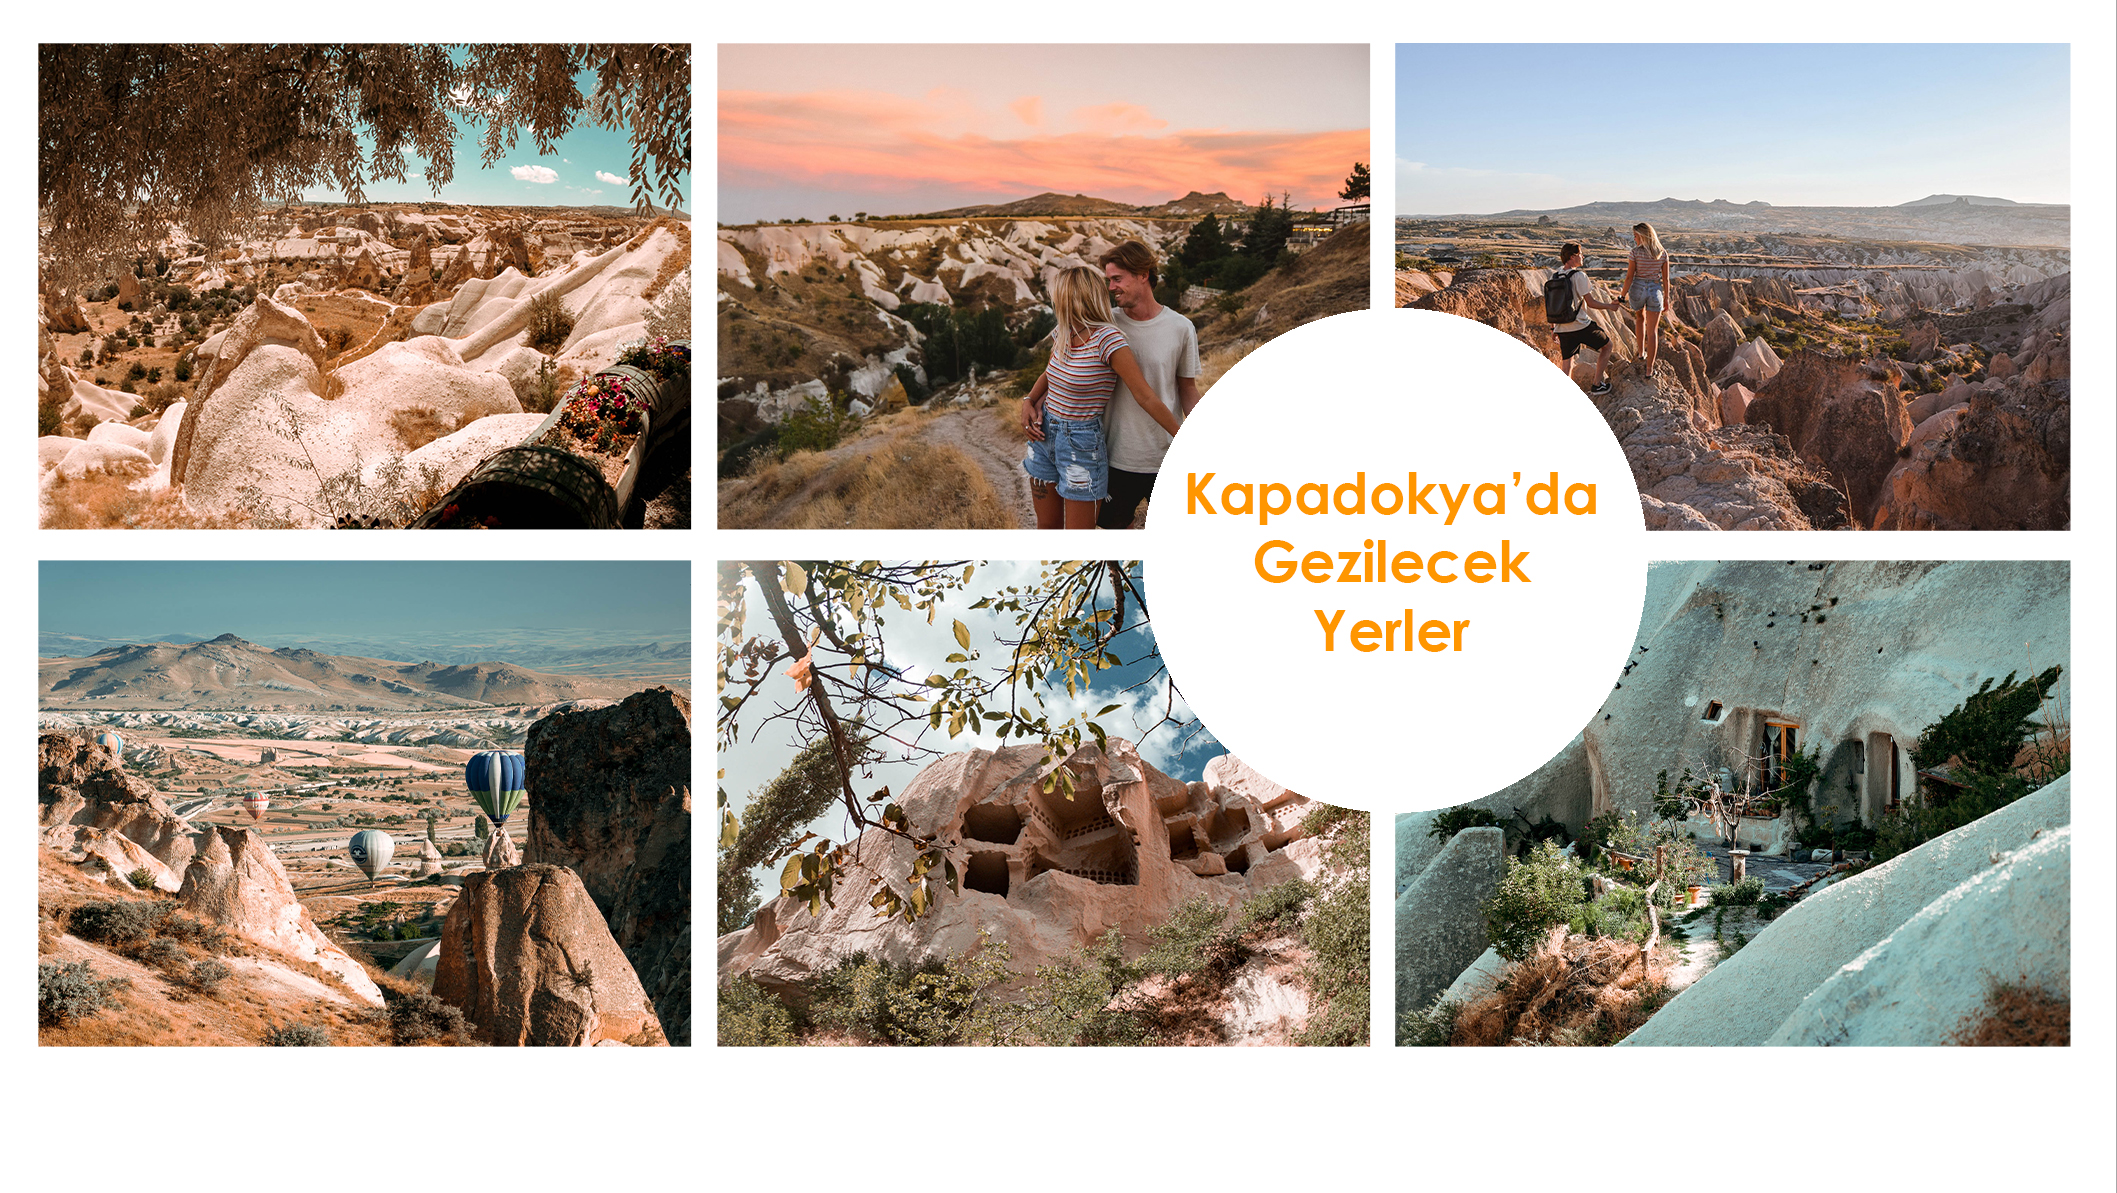 places to visit in cappadocia